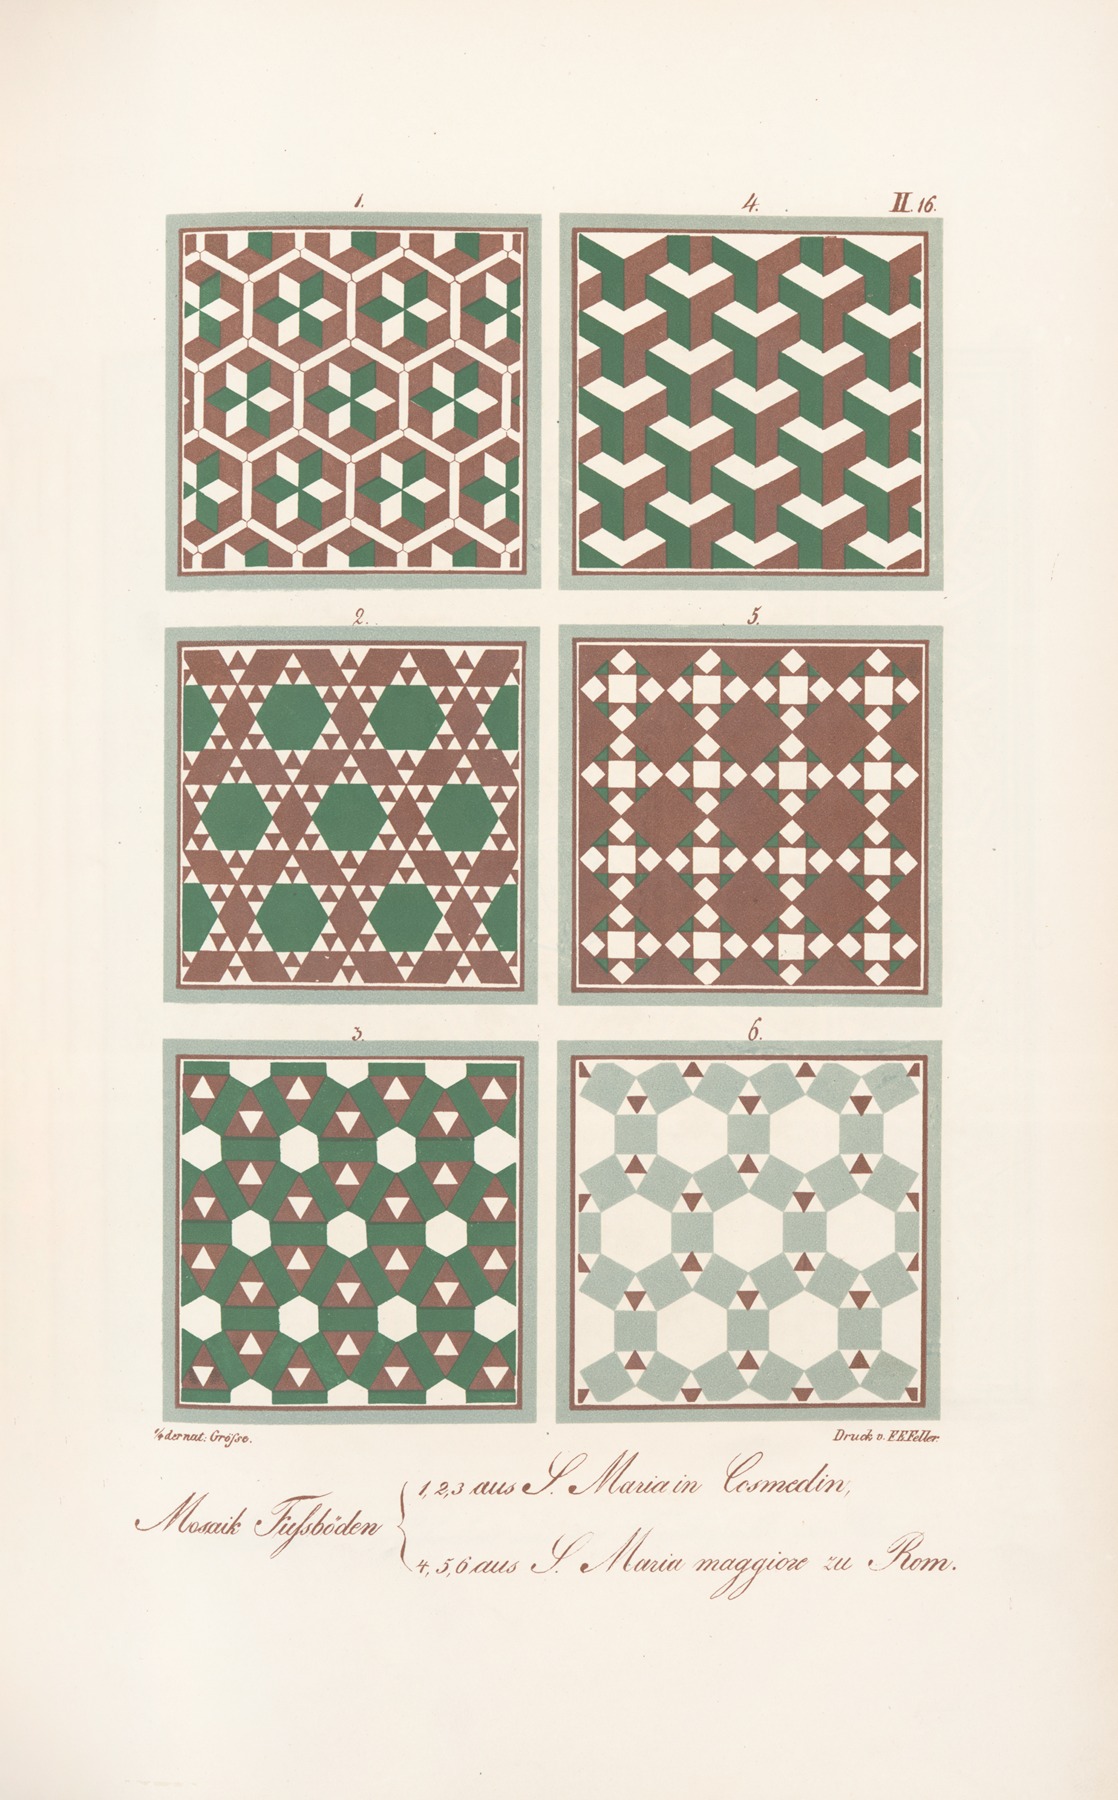 Friedrich Maximilian Hessemer - Mosaik Fussböden, 1, 2, 3 aus S. Maria in Cosmedin, 4, 5, 6 aus S. Maria maggiore zu Rom